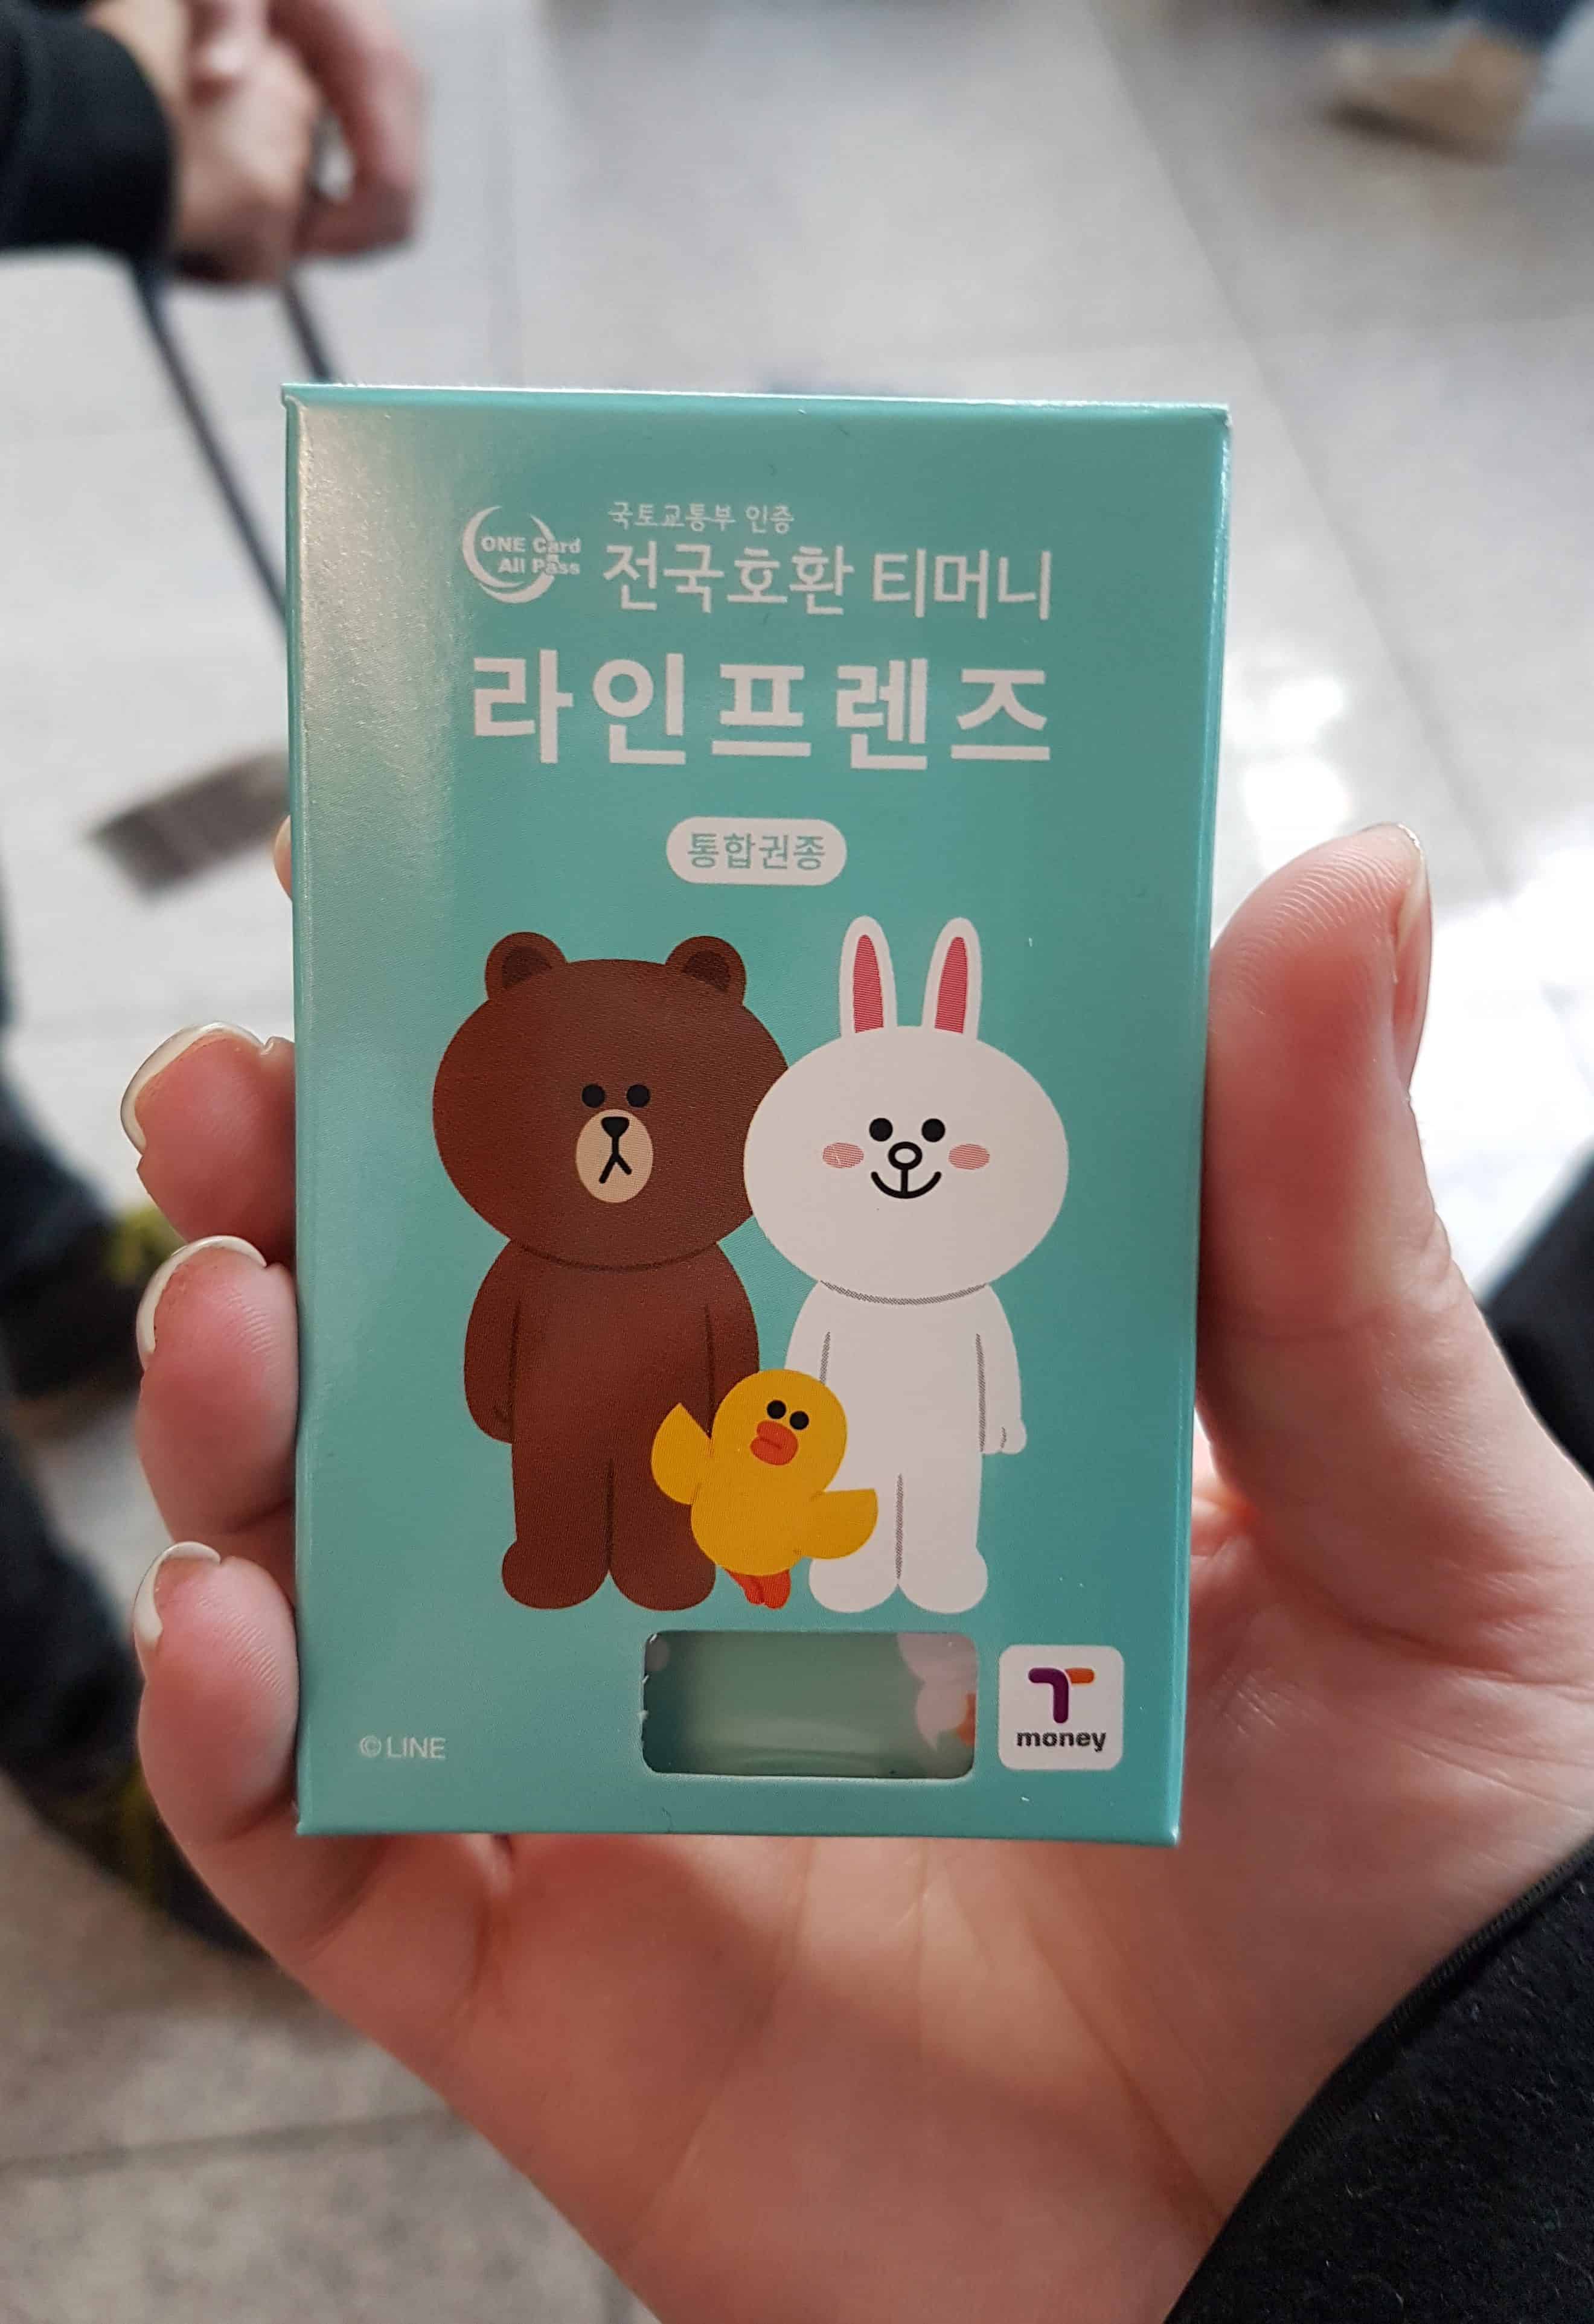 Seoul South Korea T-Money Card T Card with Line Friends